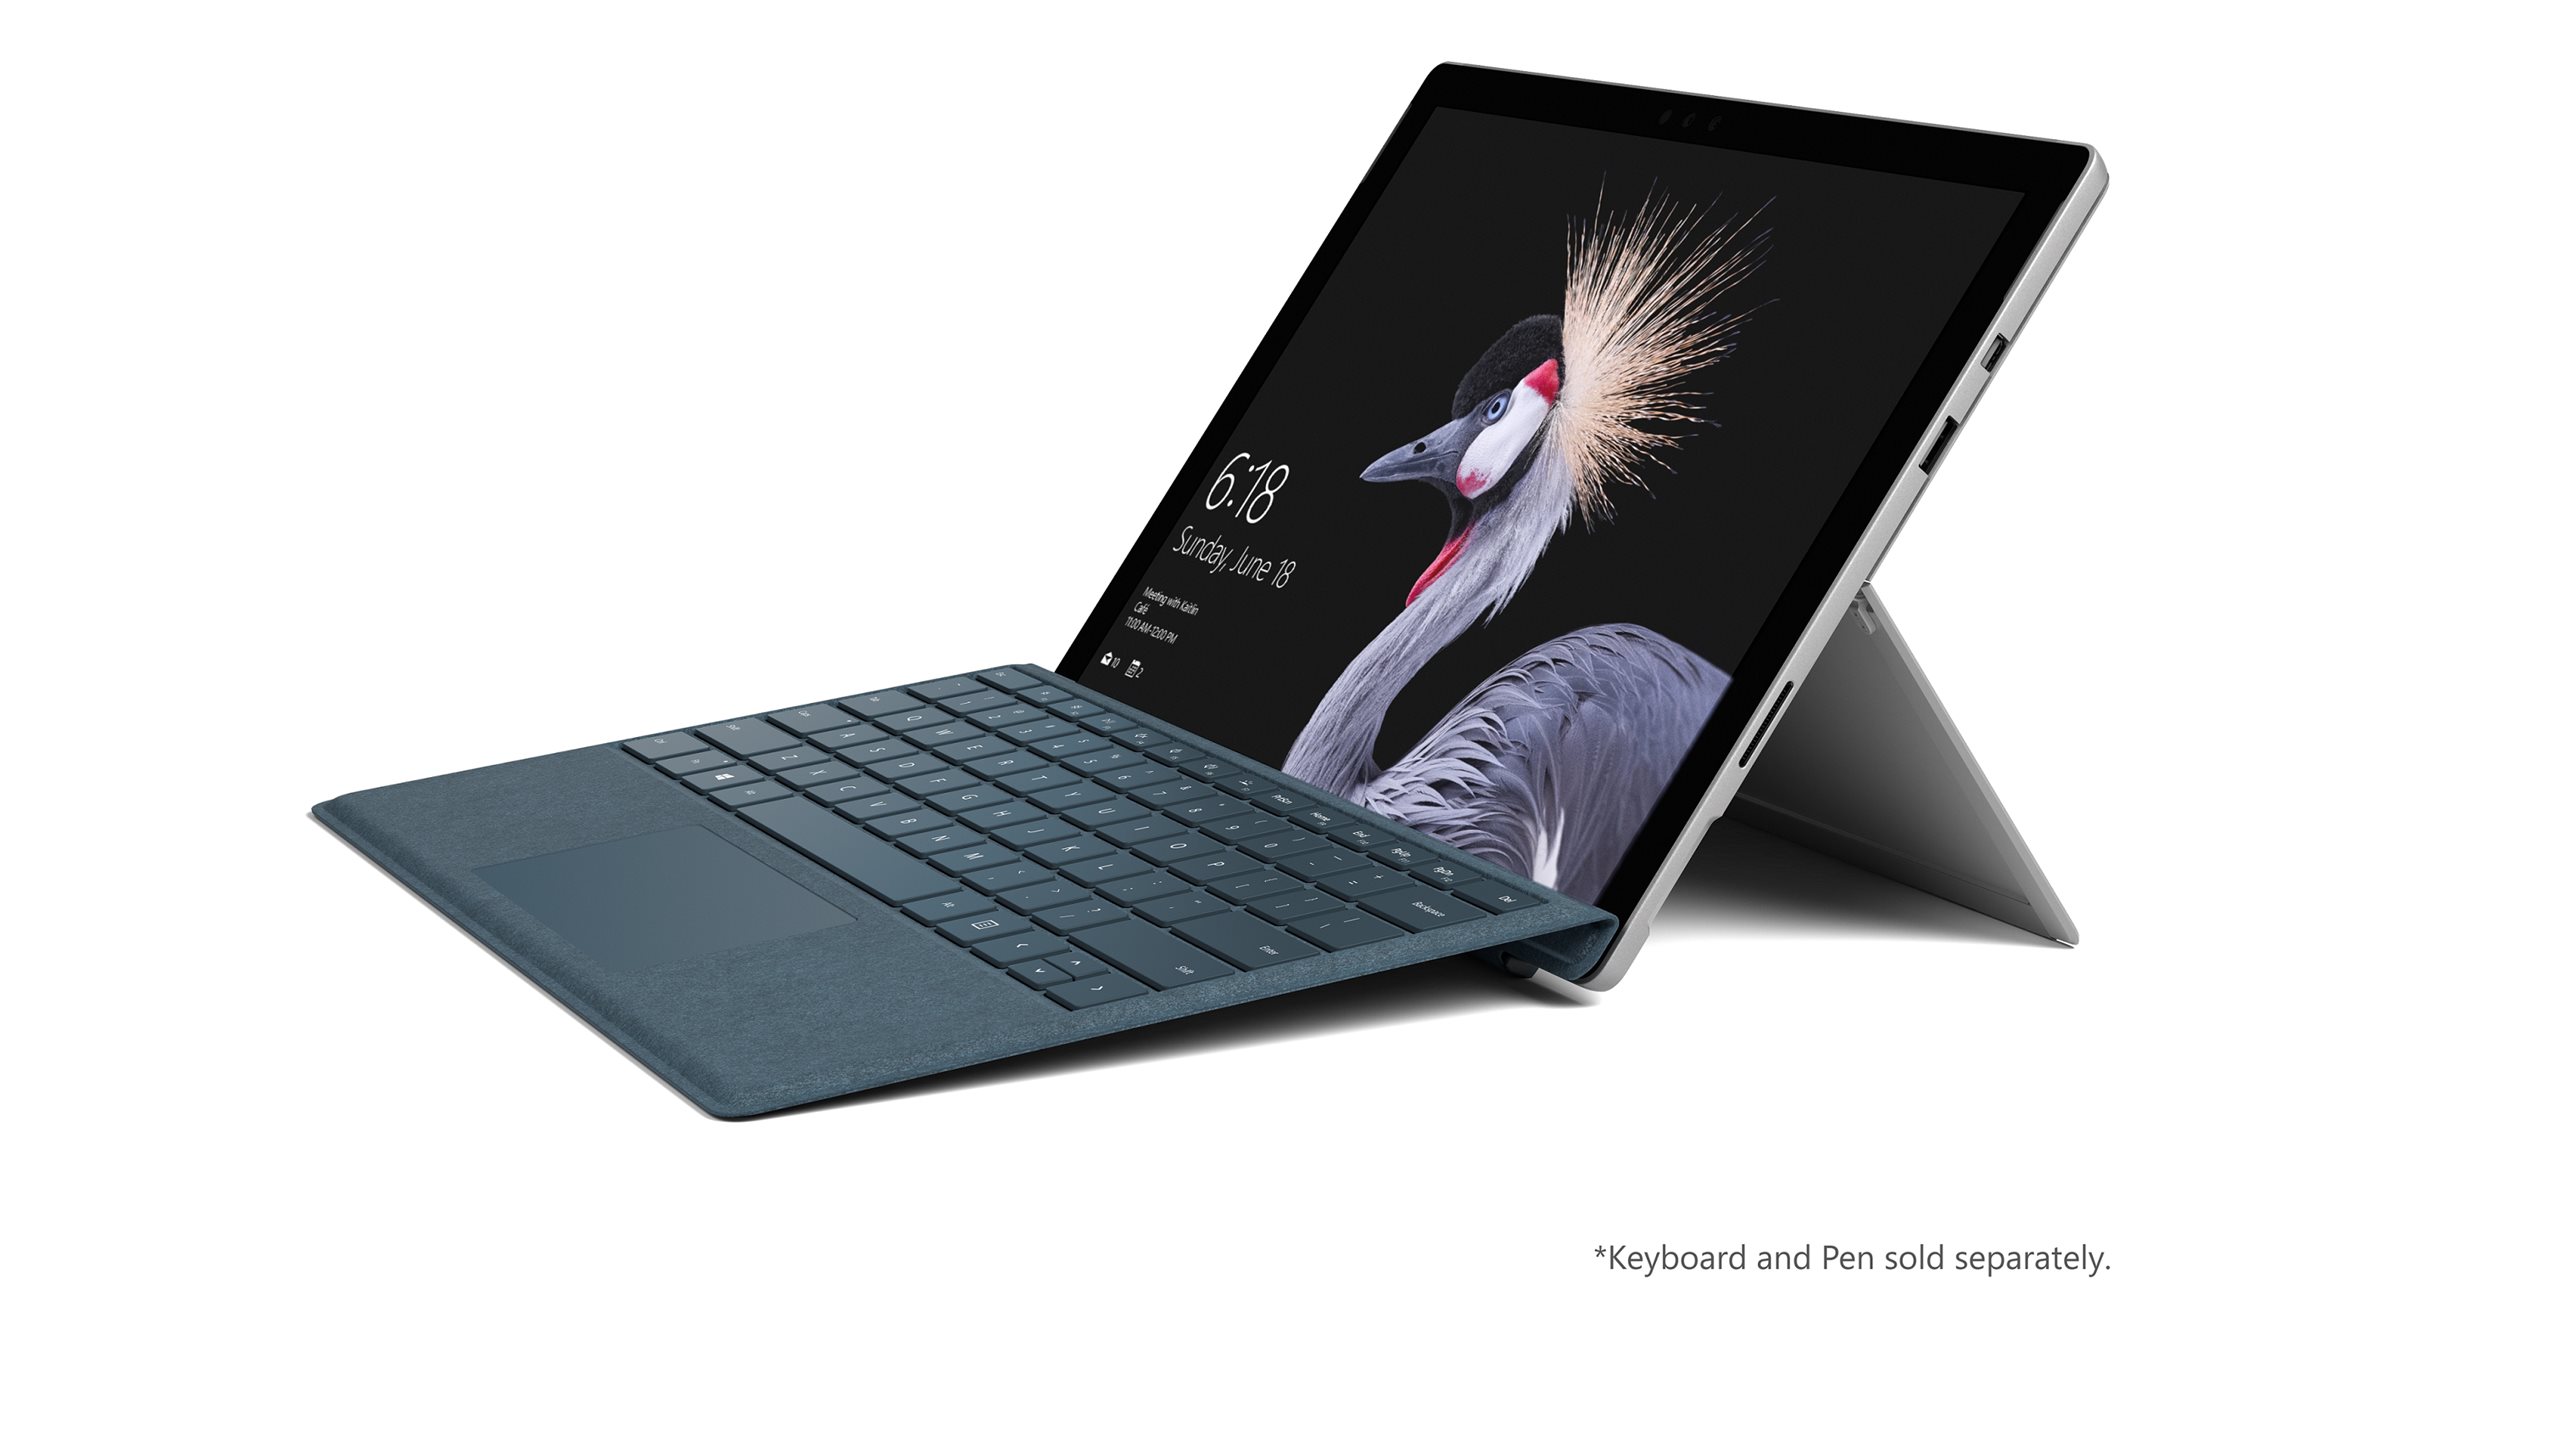 Microsoft Surface Pro 2017 Edition FJX-00001 Intel Core i5 7th Gen 